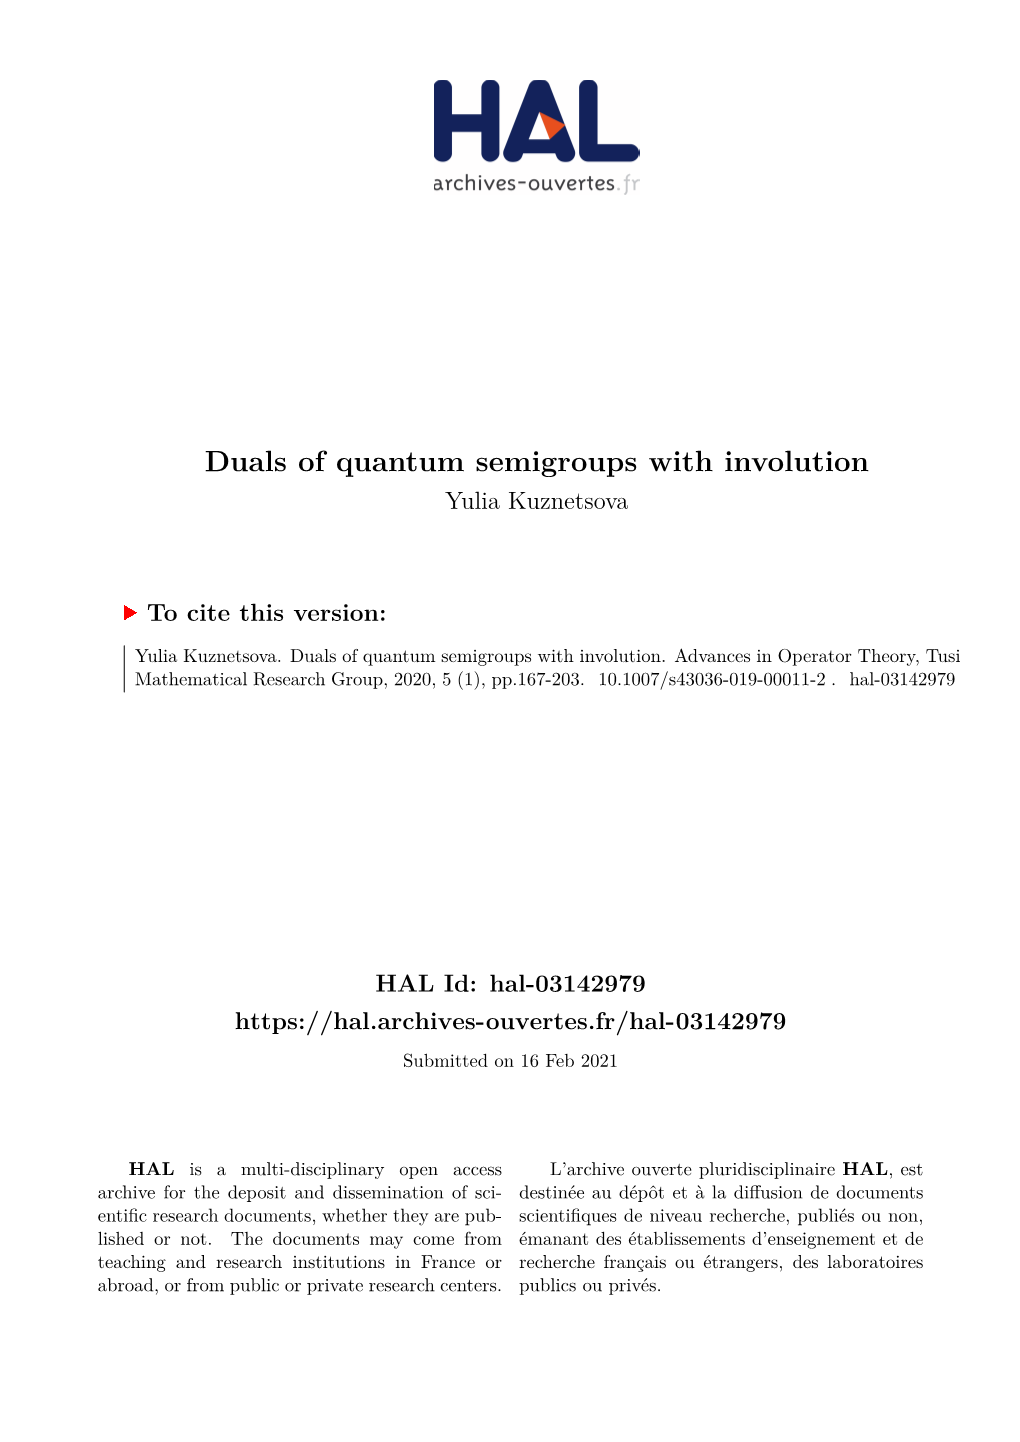 Duals of Quantum Semigroups with Involution Yulia Kuznetsova